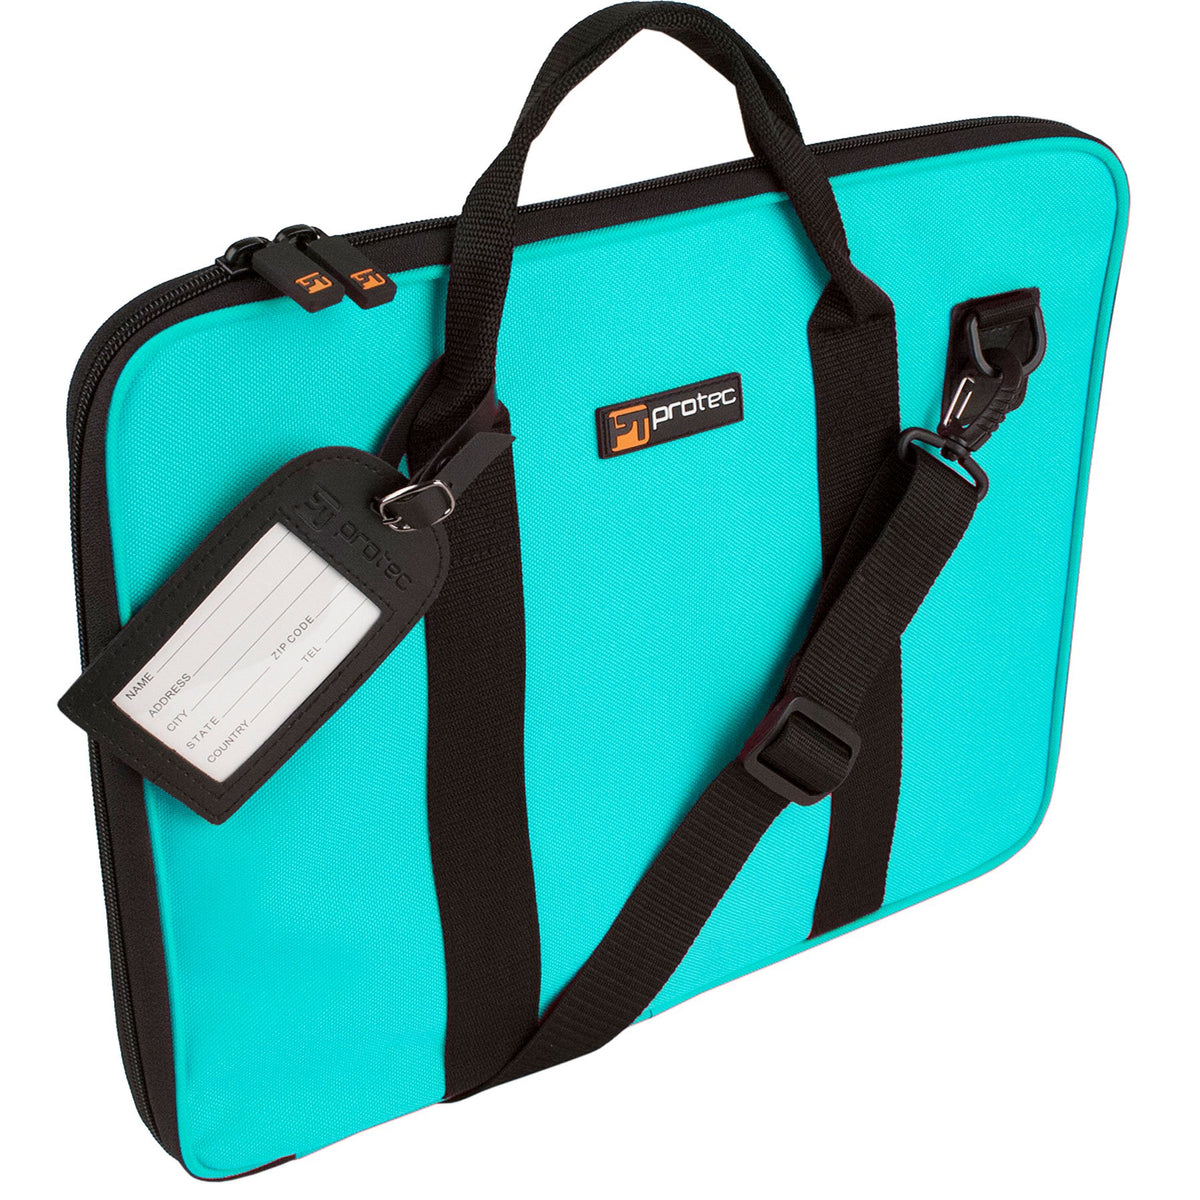 Protec - Slim Portfolio Bag-Accessories-Protec-Mint-Music Elements